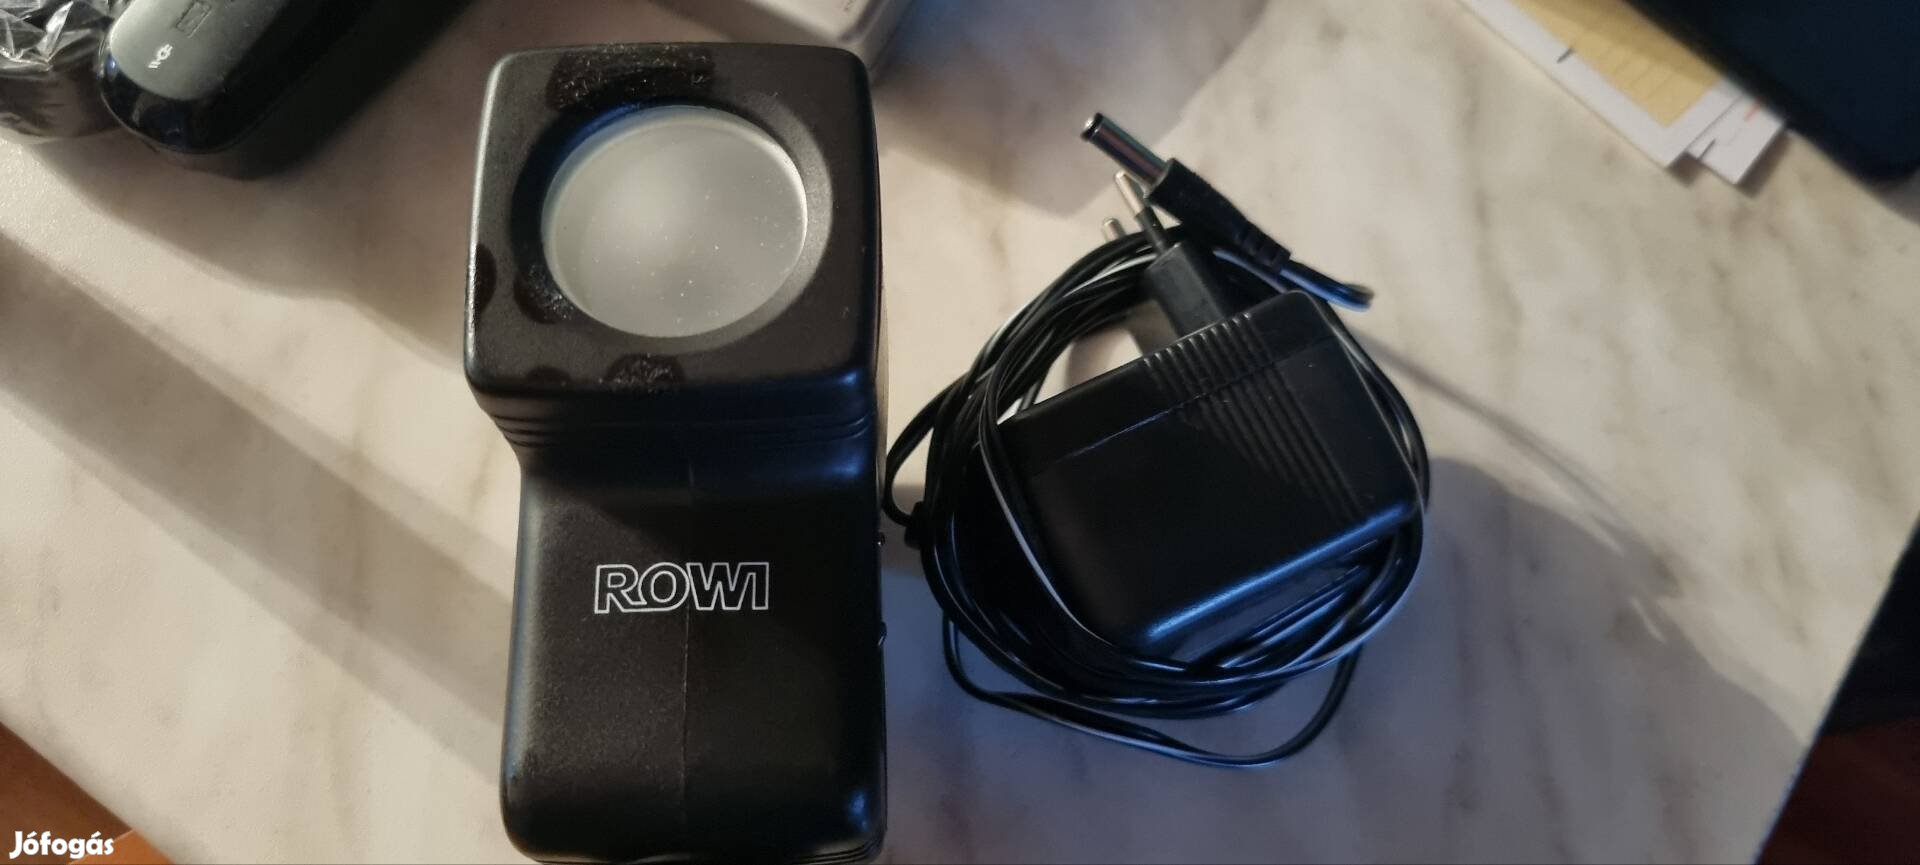 Rowi video30 kamera lámpa 